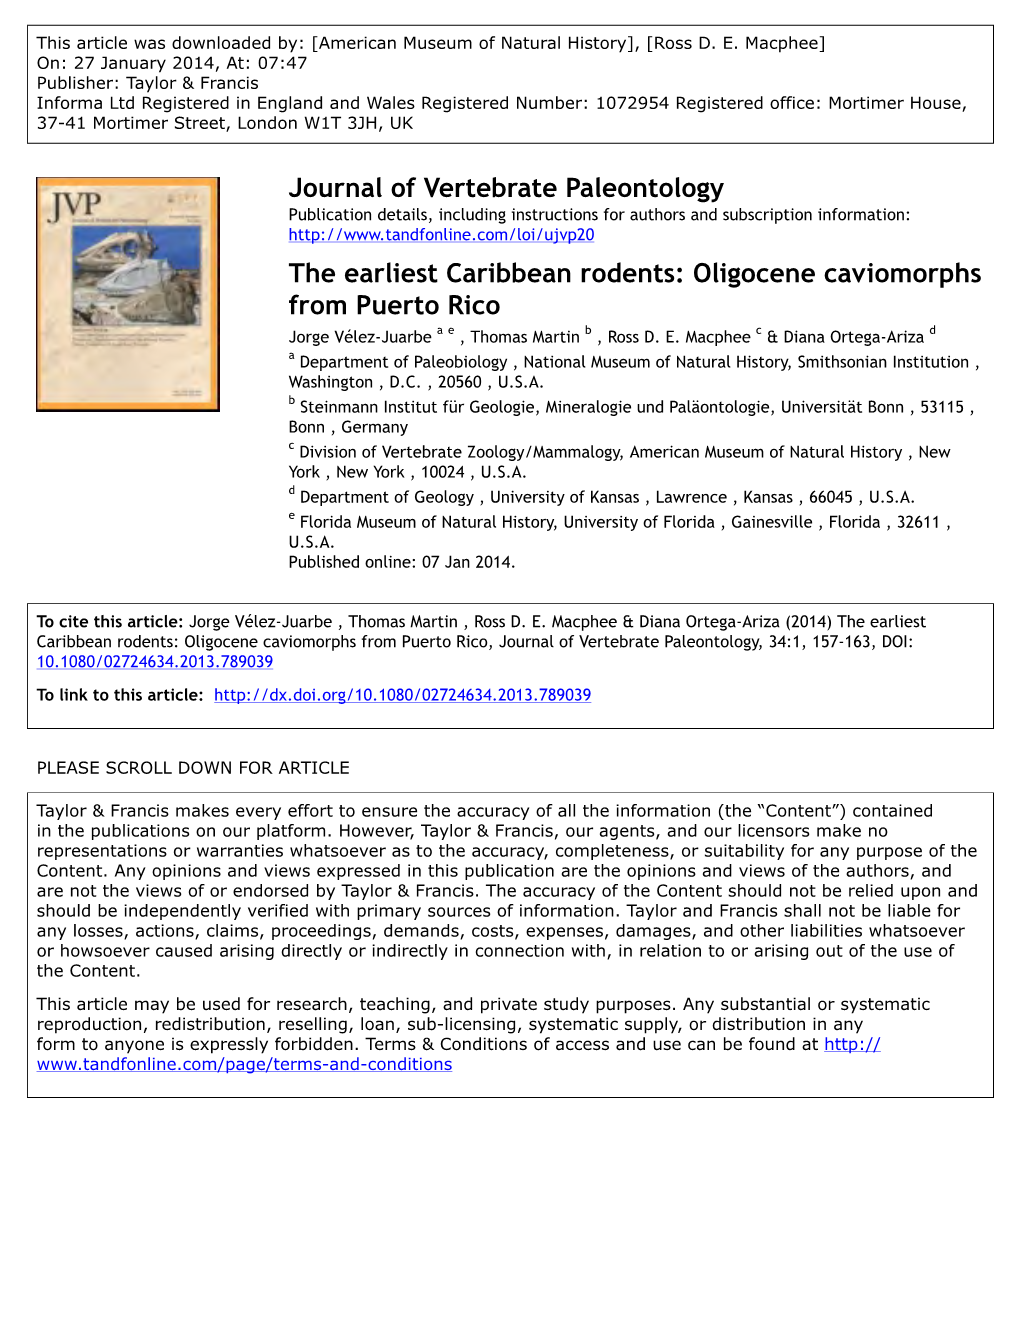 Journal of Vertebrate Paleontology the Earliest Caribbean Rodents